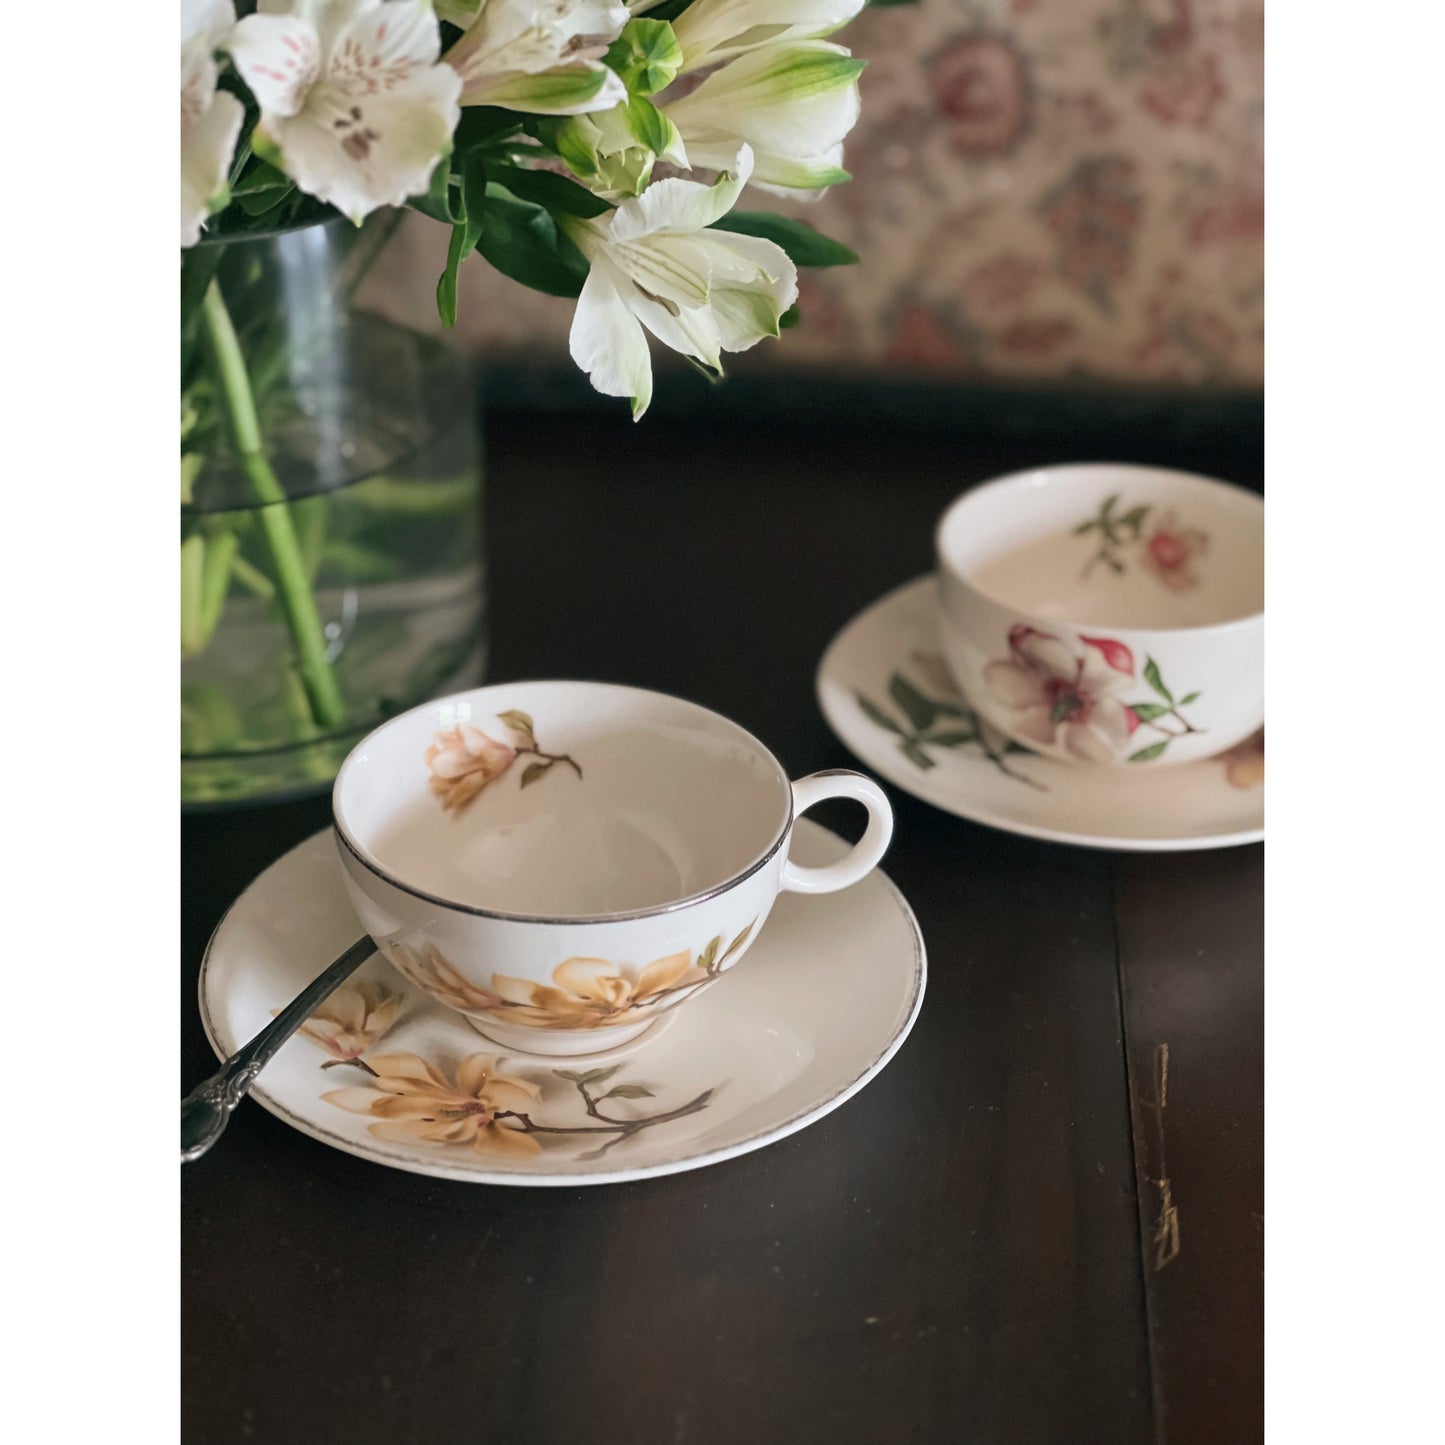 Pair of Vintage Mix Match Floral Teacups & Saucer Sets